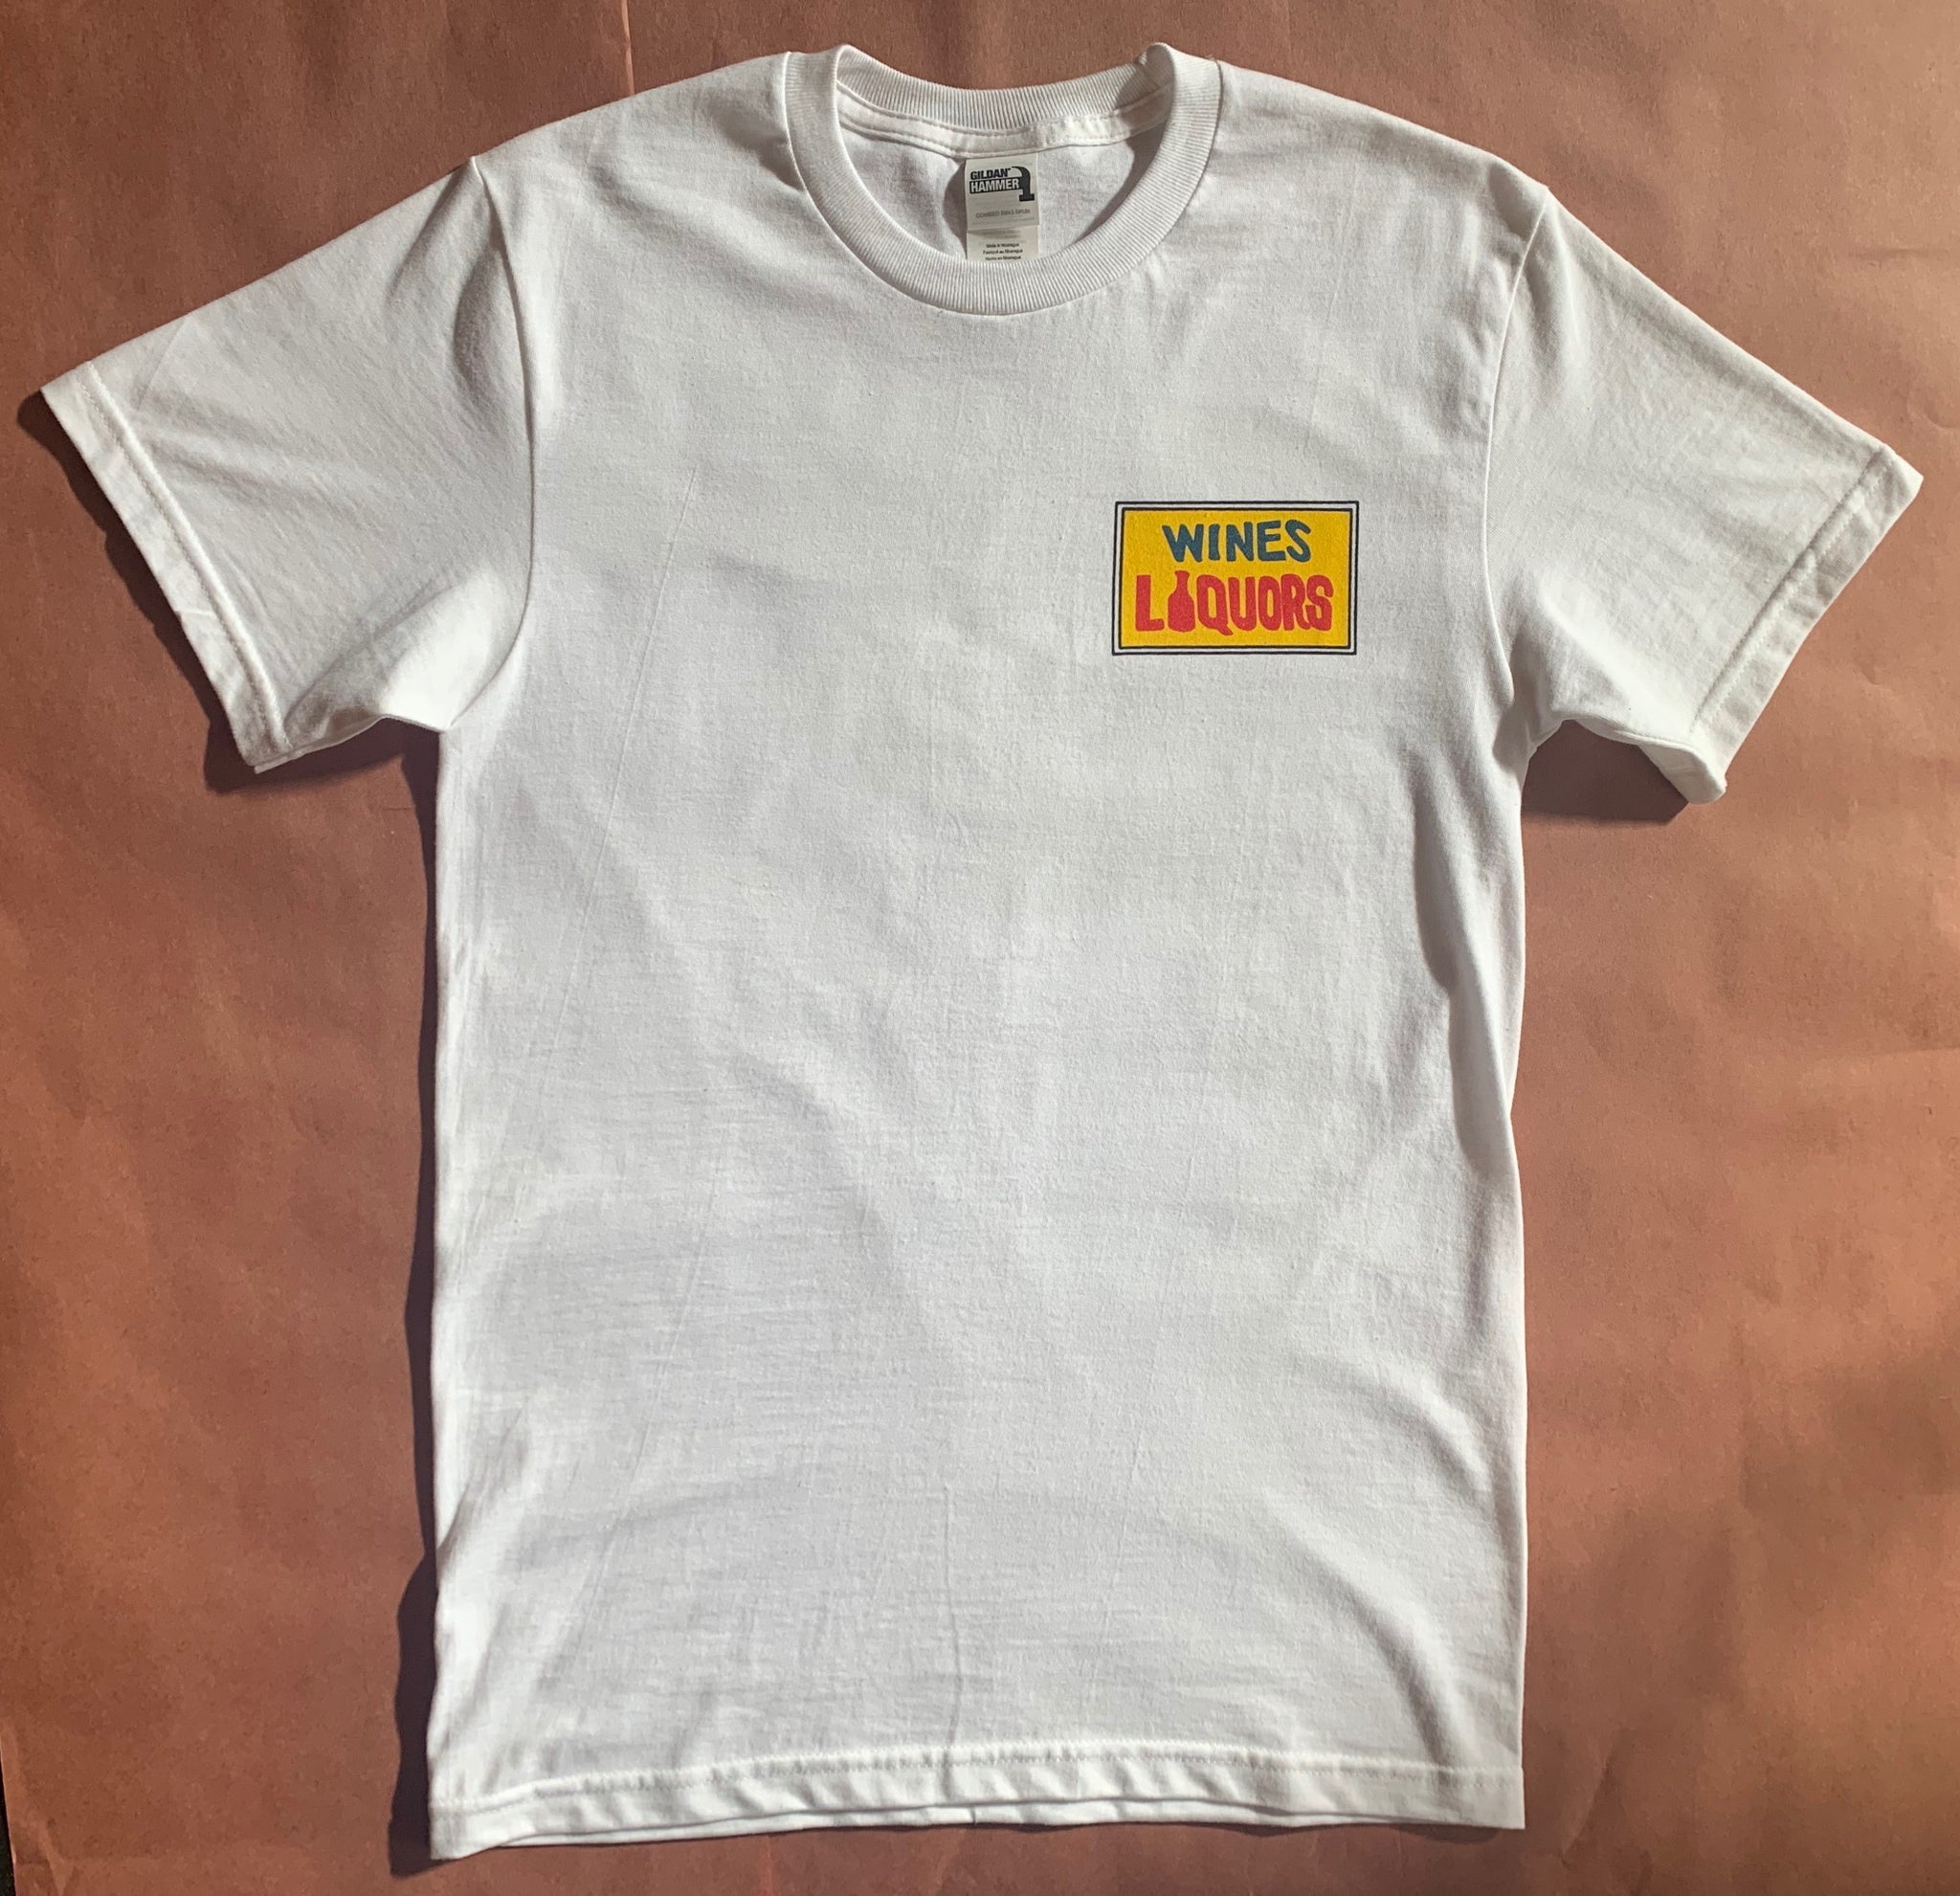 Red Hook Tavern T-Shirt (White)